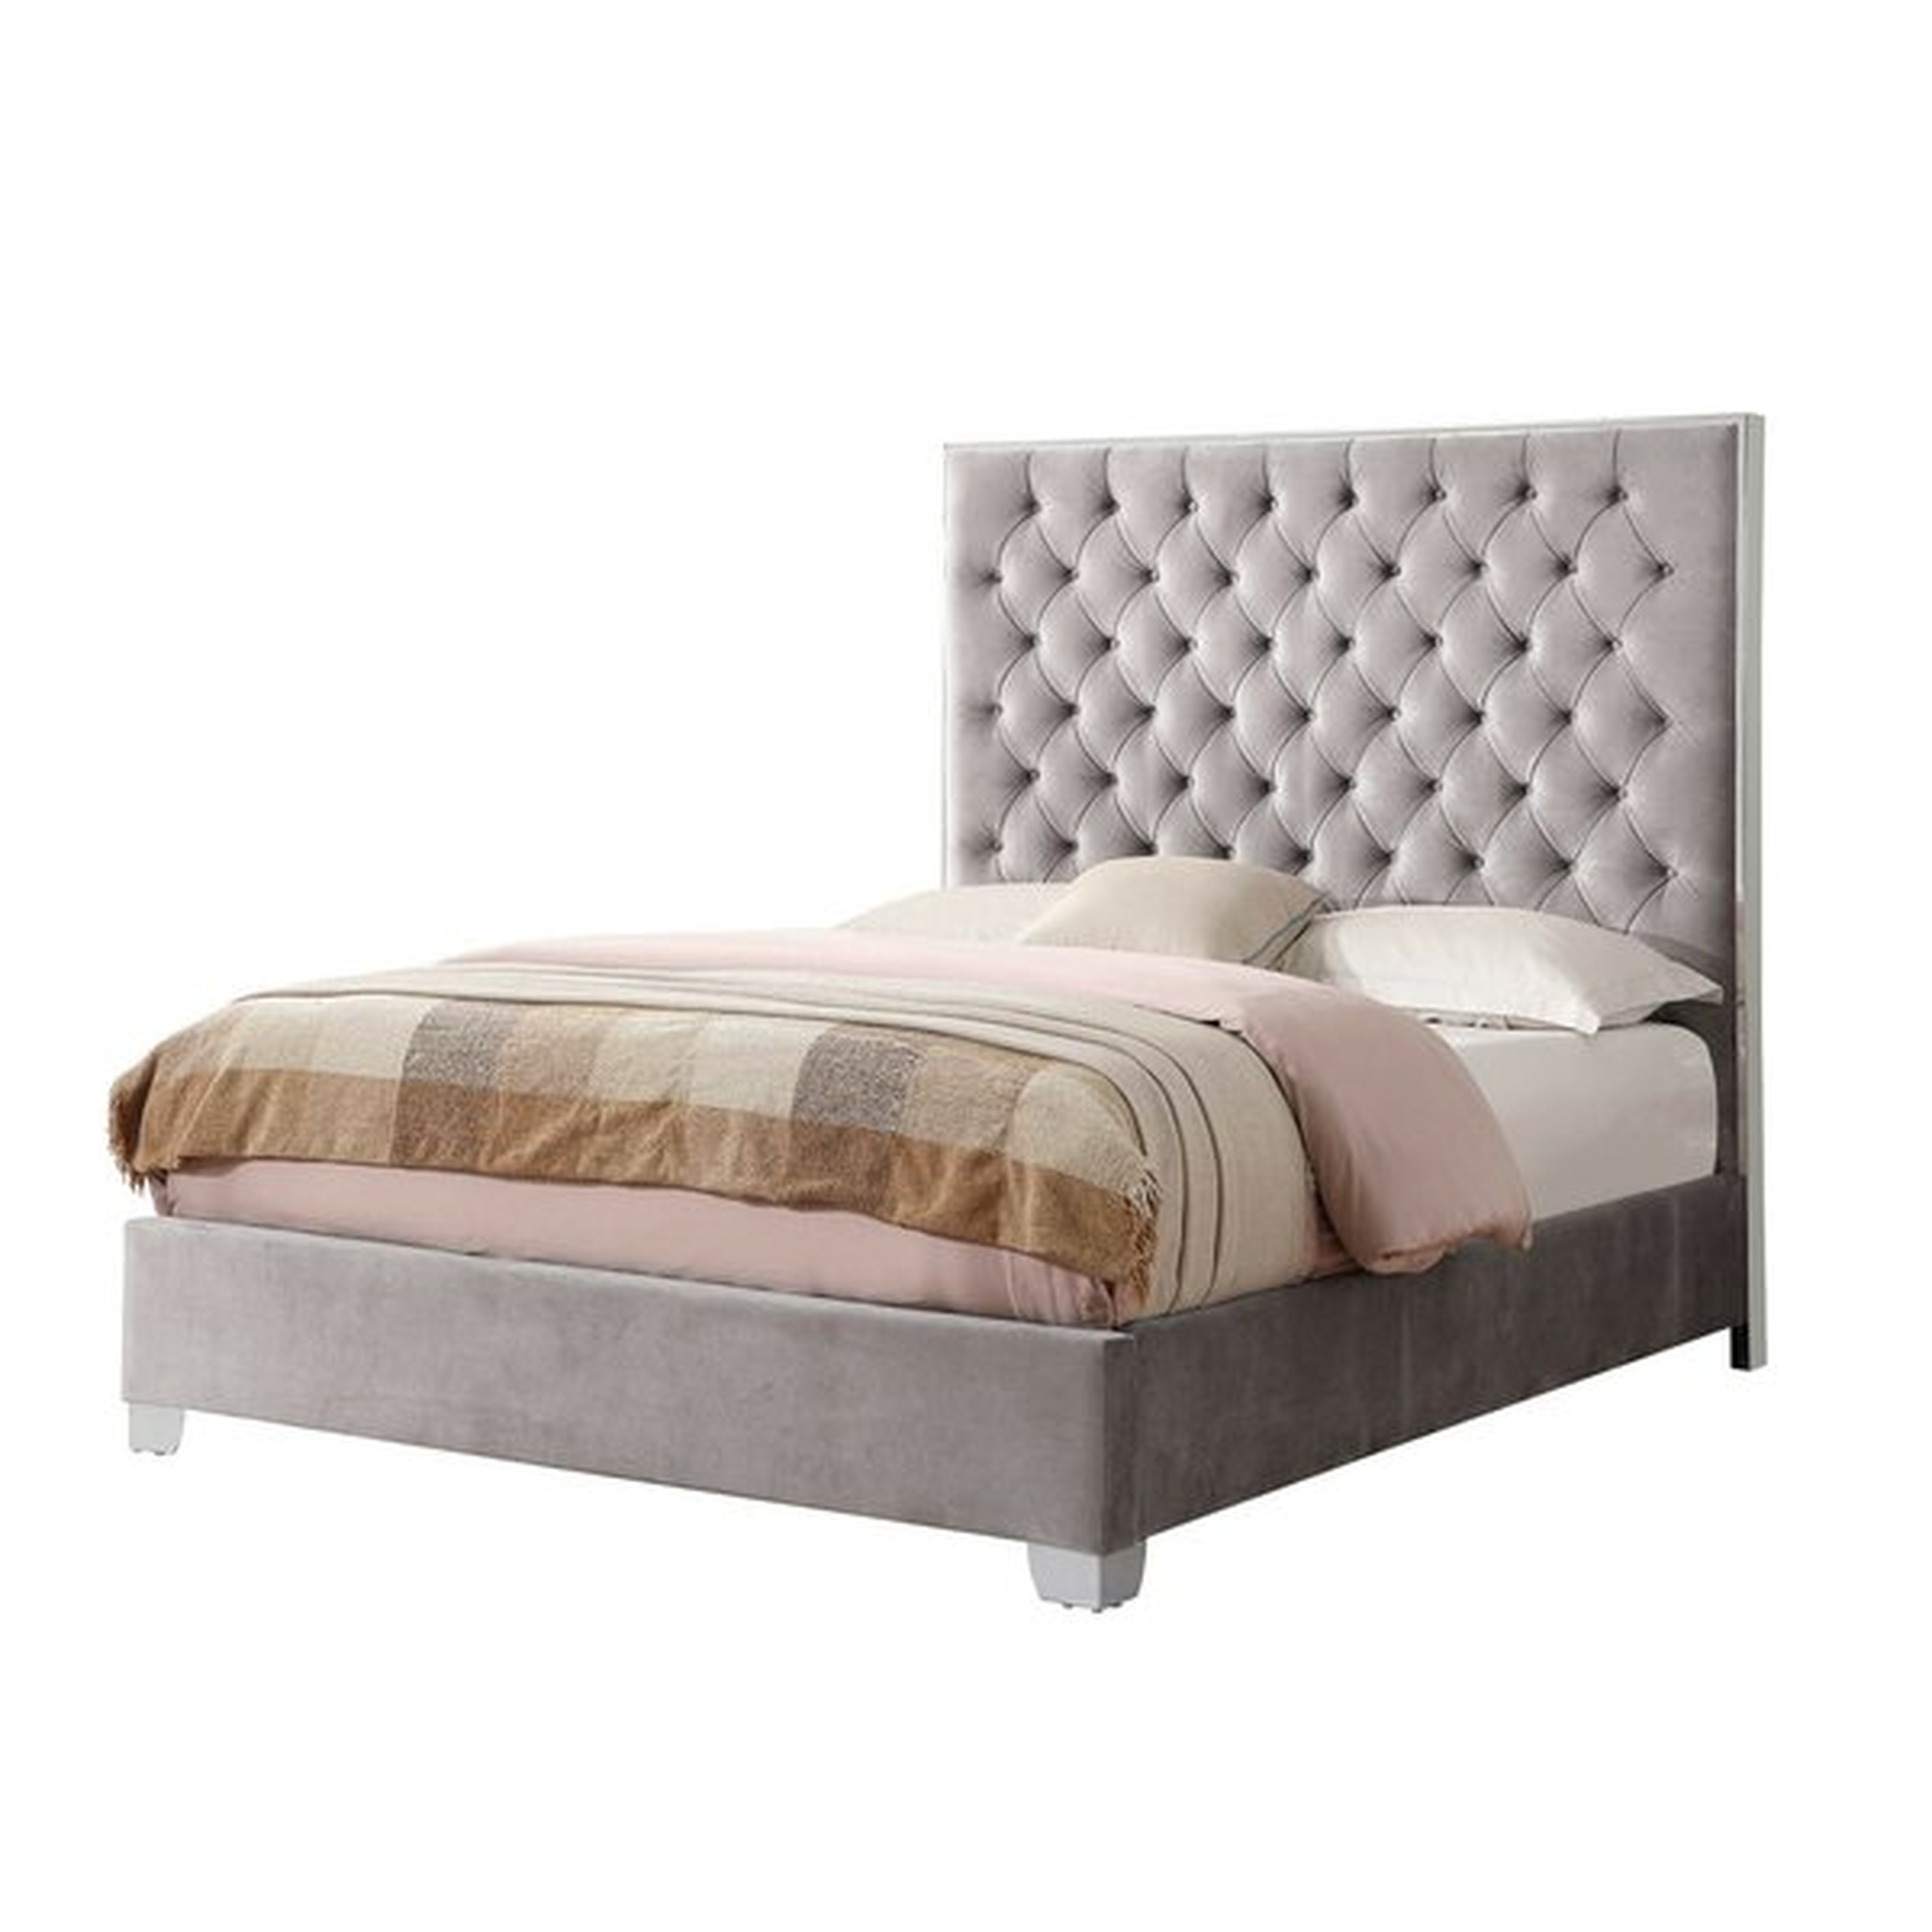 Lollie Tufted Low Profile Standard Bed - Wayfair